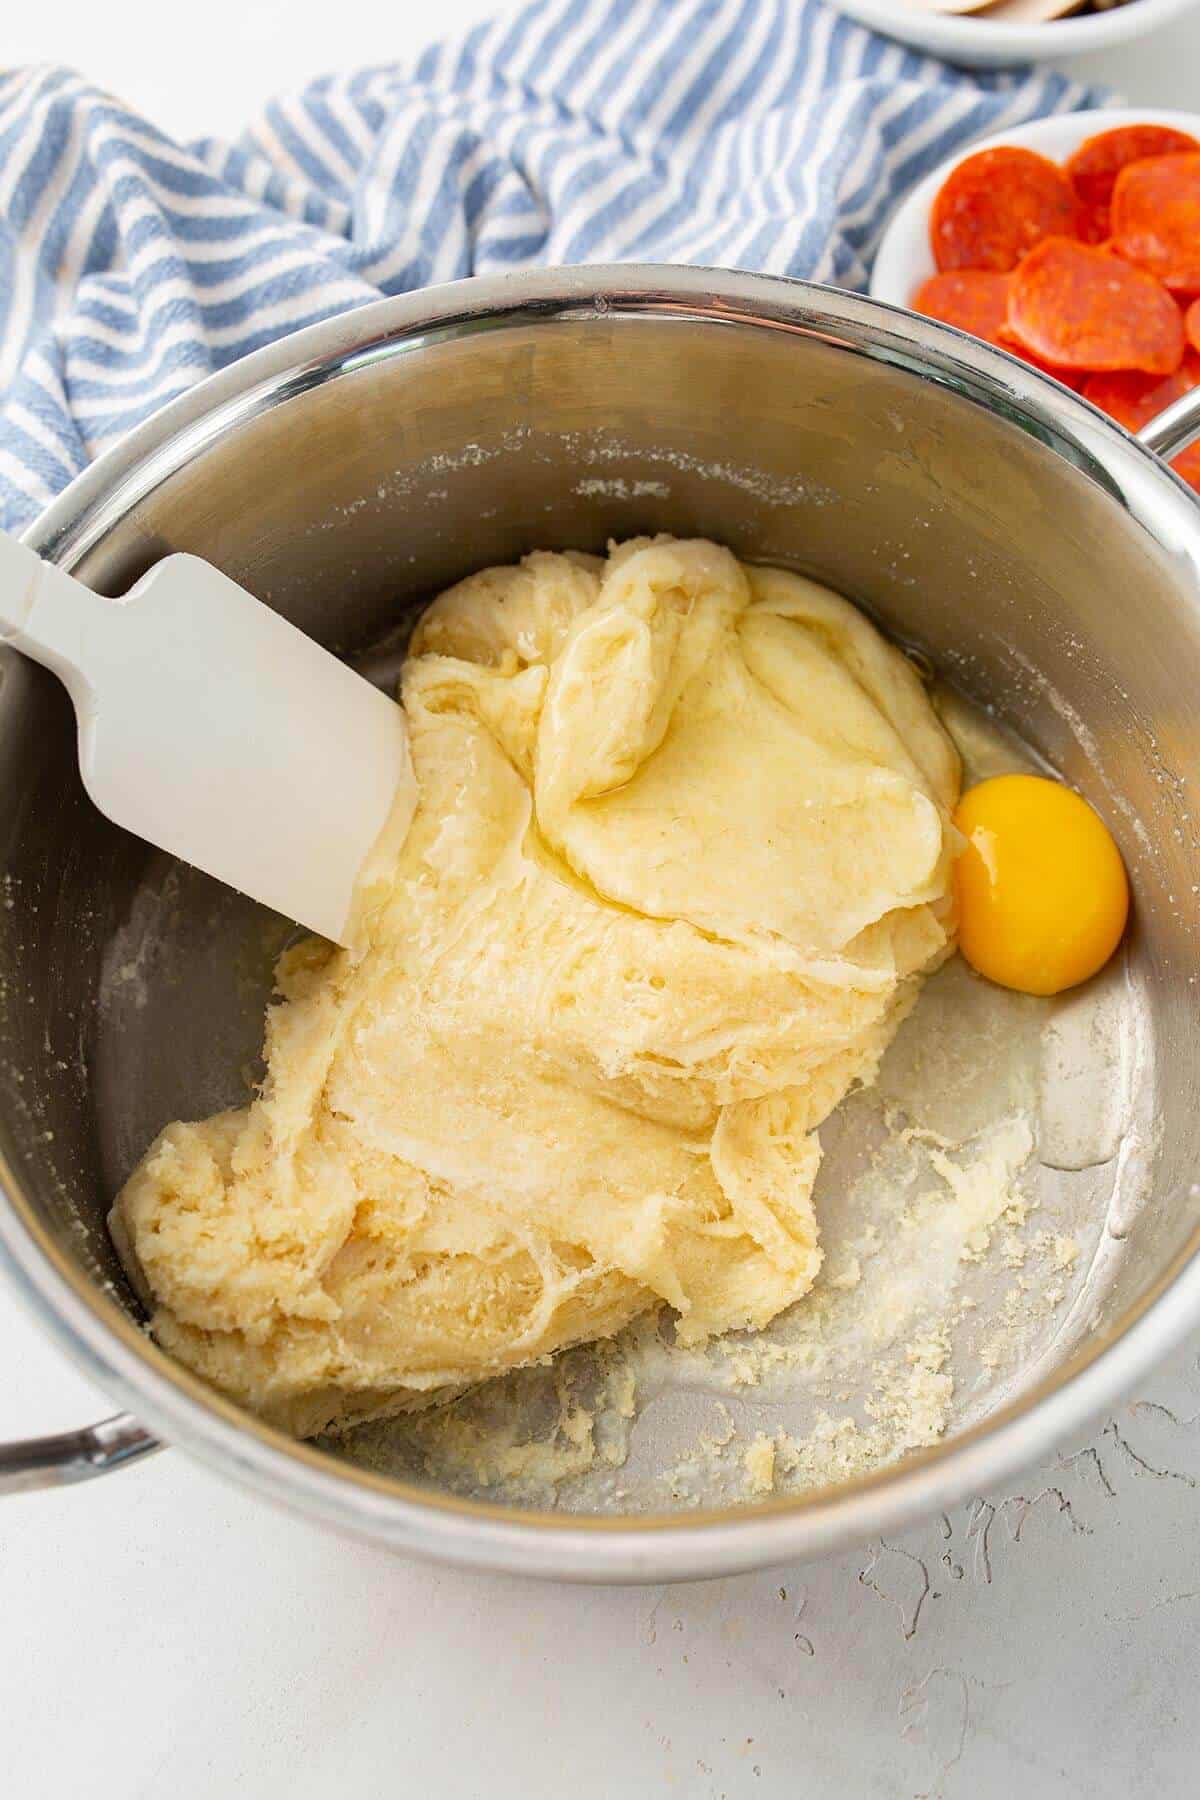 Mixing fathead dough in a metal bowl